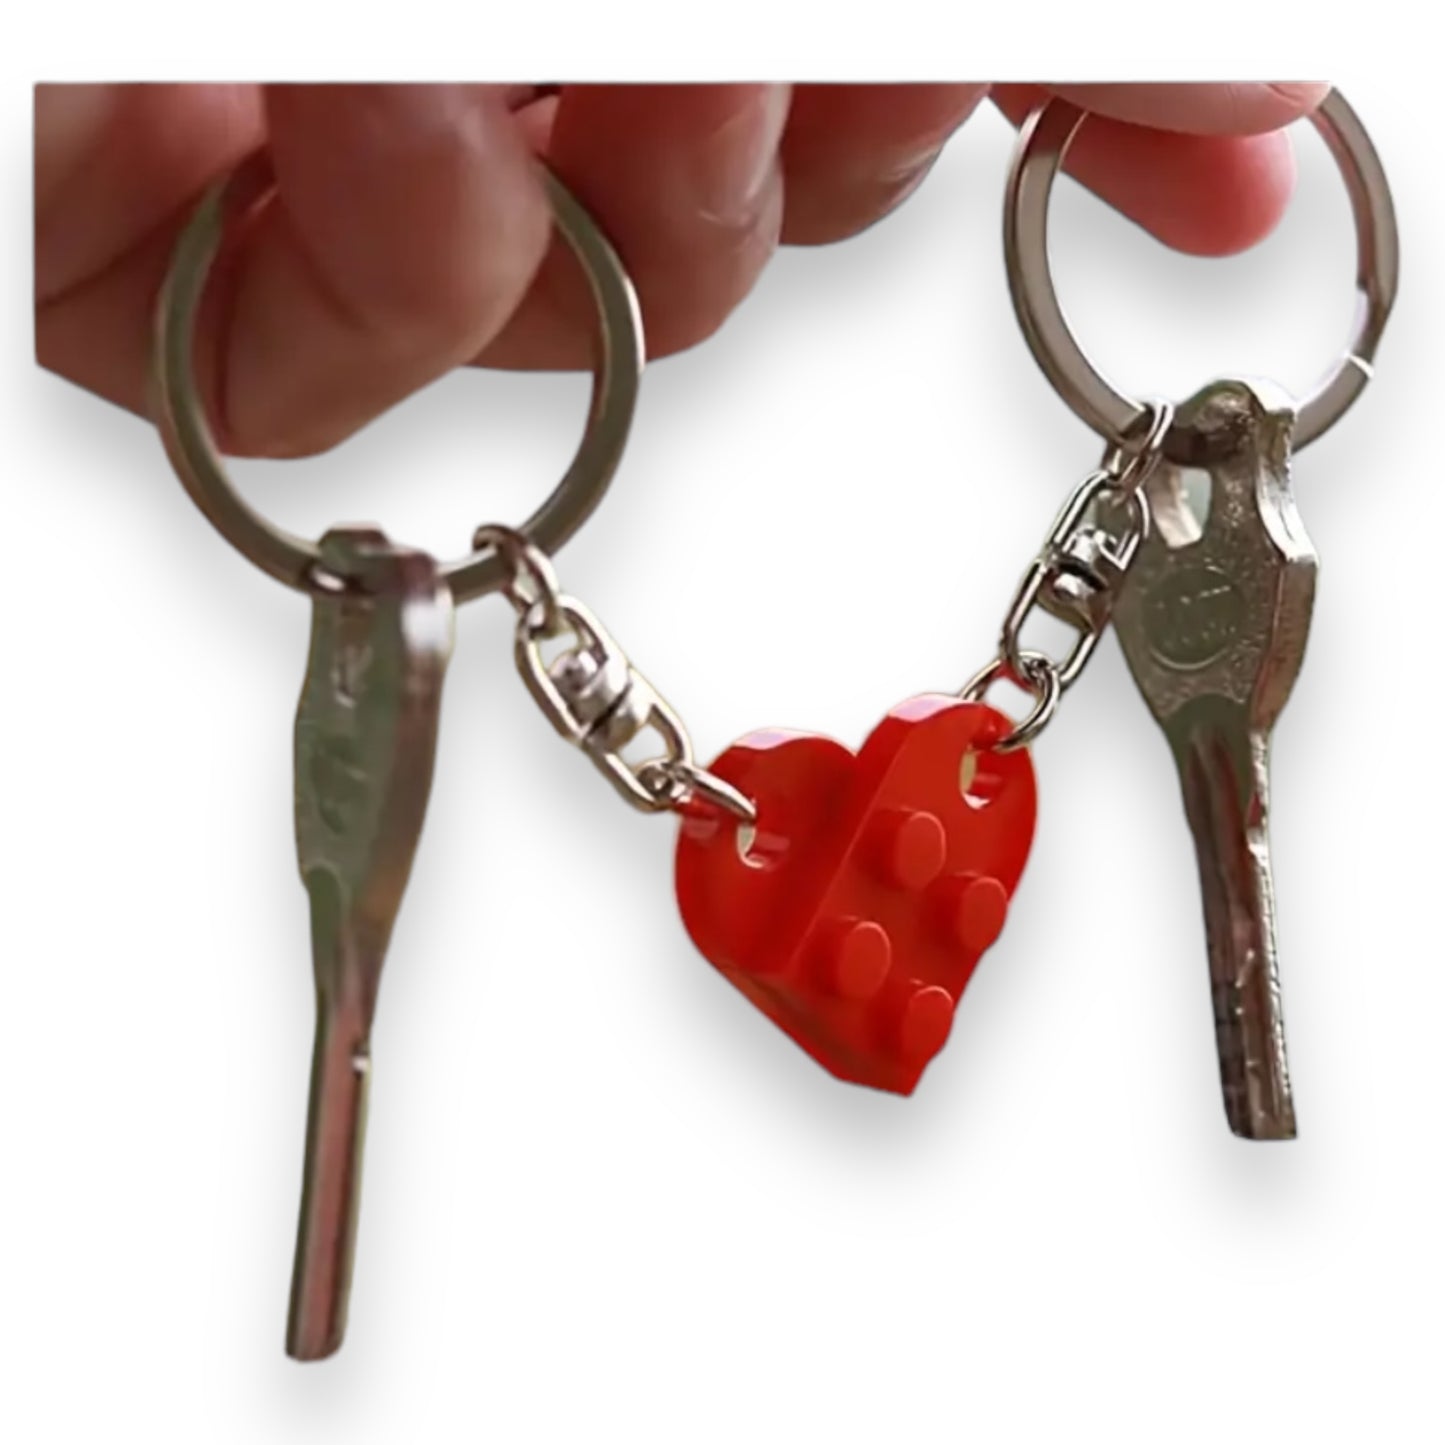 Kinky Pleasure - T046 - Keychain Hearts Blocks Connected Red